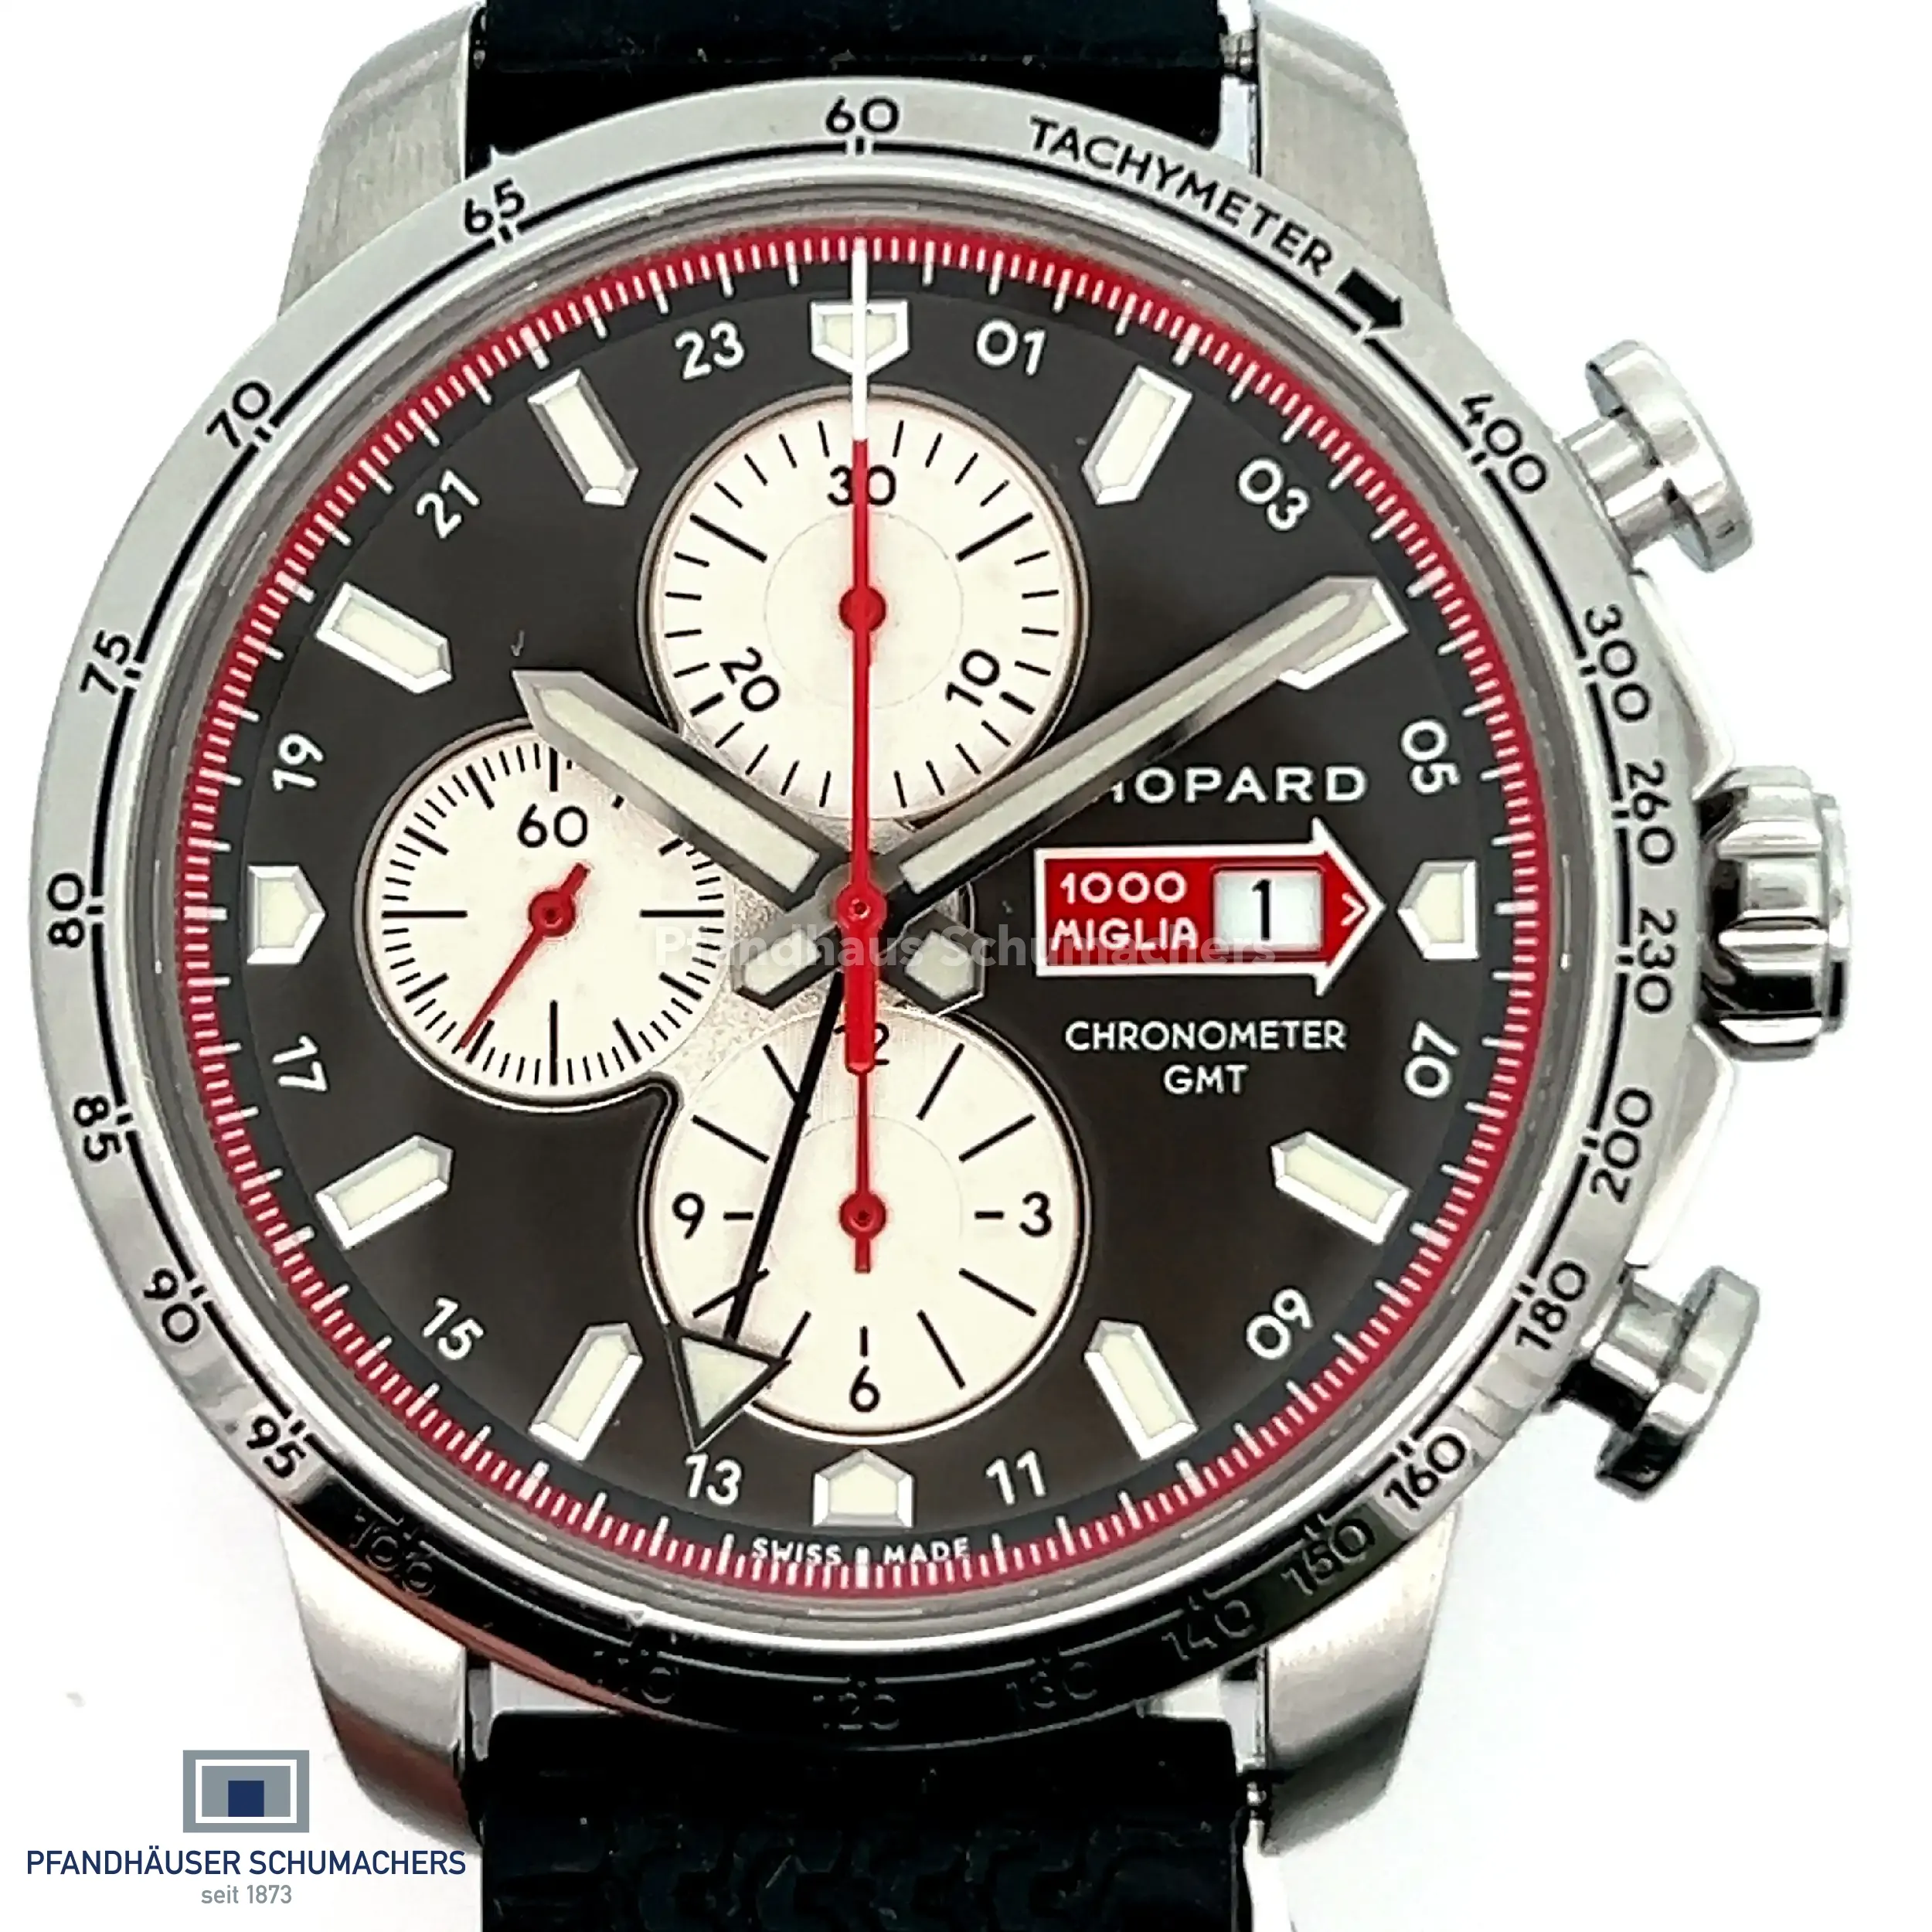 Herrenuhr Chopard-Mille Miglia GMT Brescia-Roma-Brescia Chronometer limitiert auf 2013 Stk. 